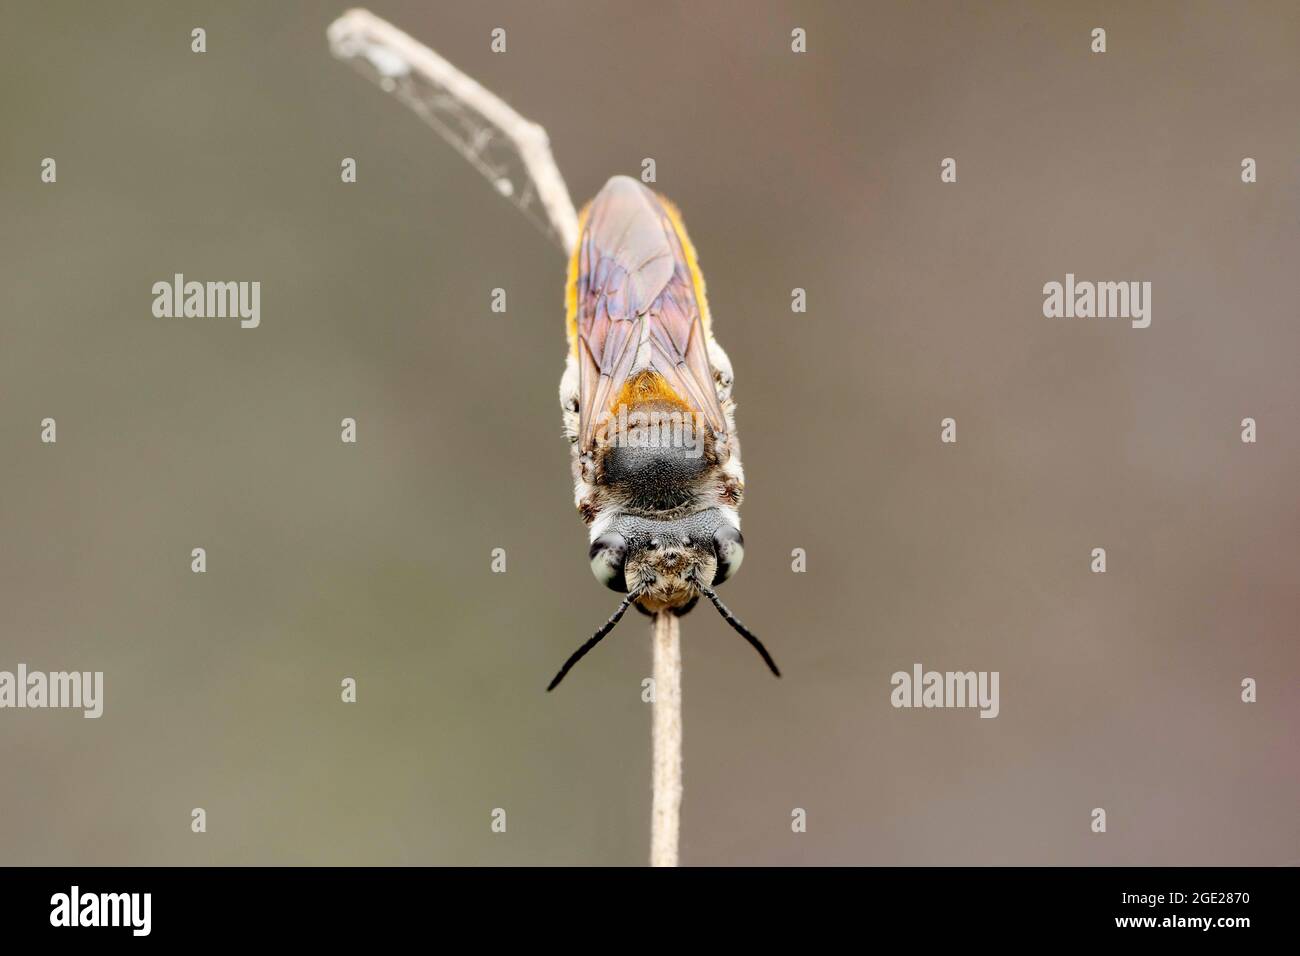 Dorsal view of Flaming Sweat bee, Megachile bicolor, Satara, Maharashtra, India Stock Photo